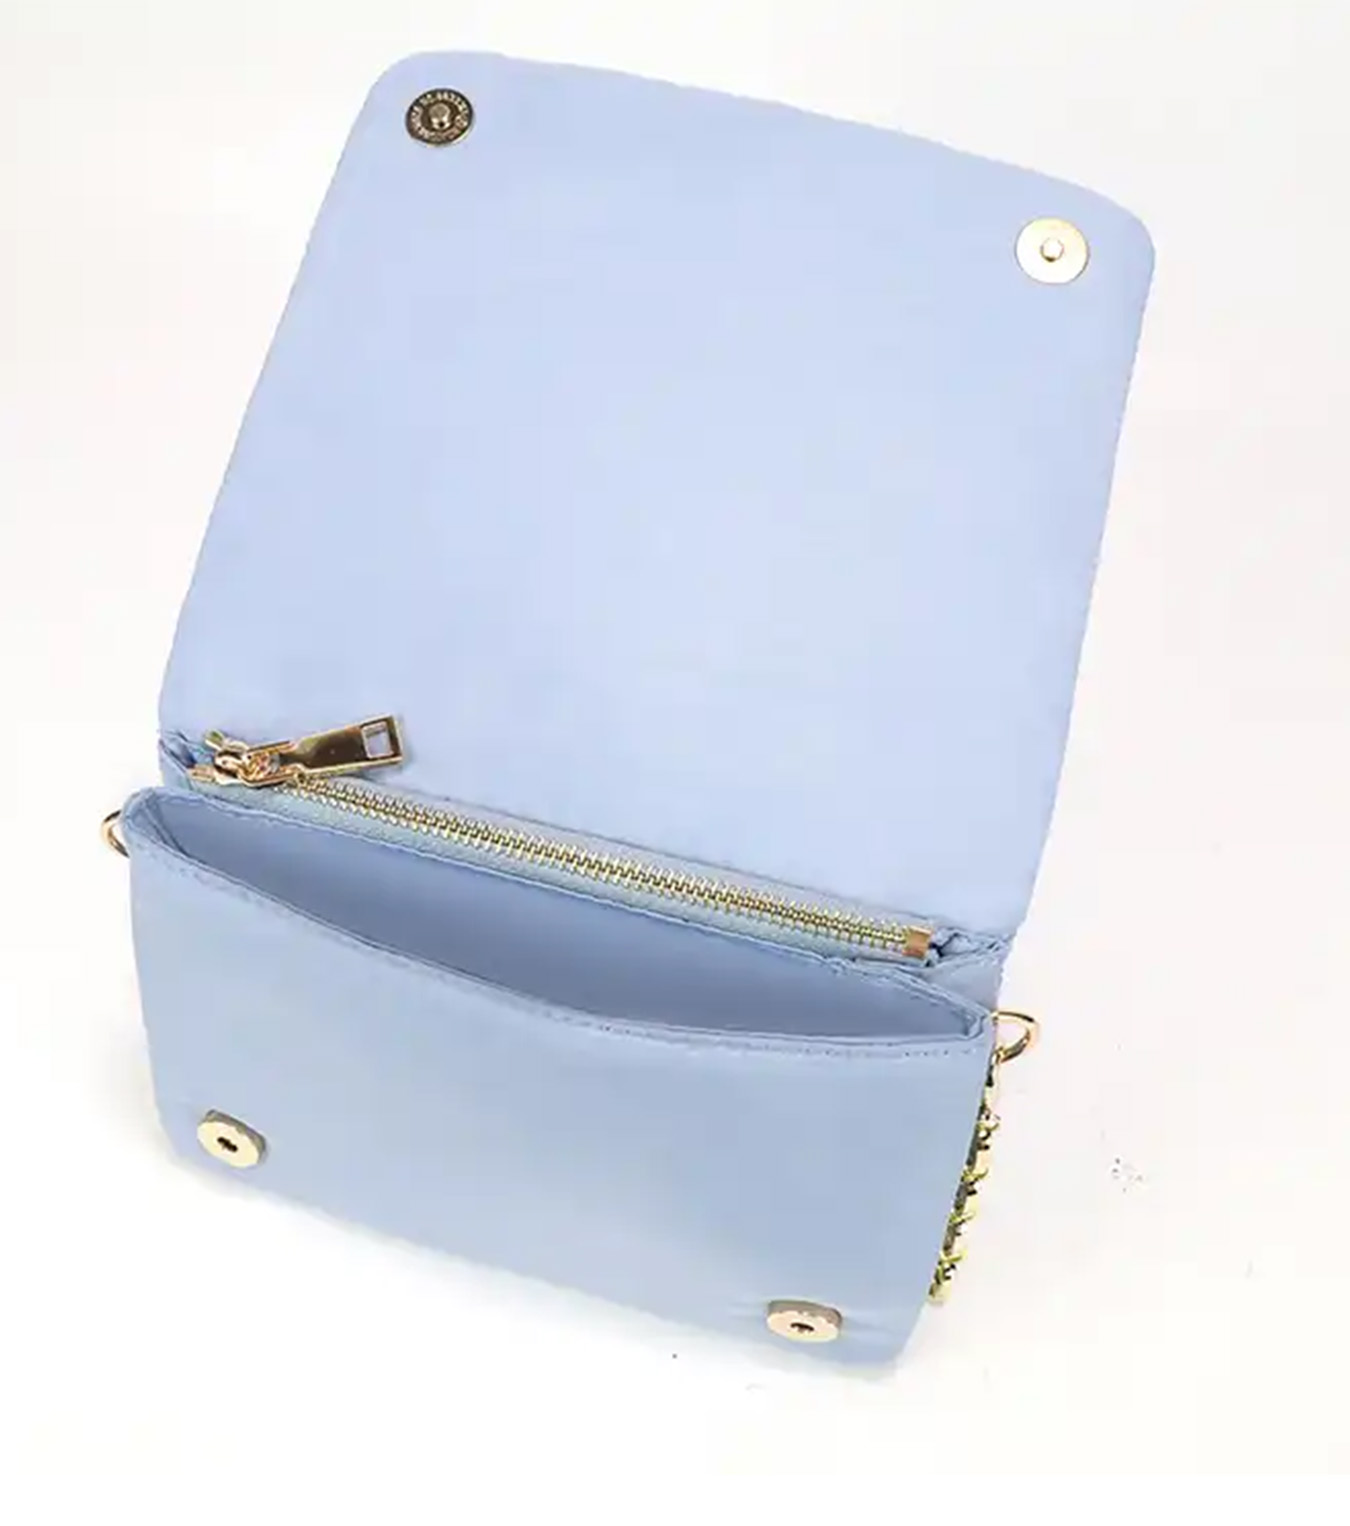 Light blue crossbody bag